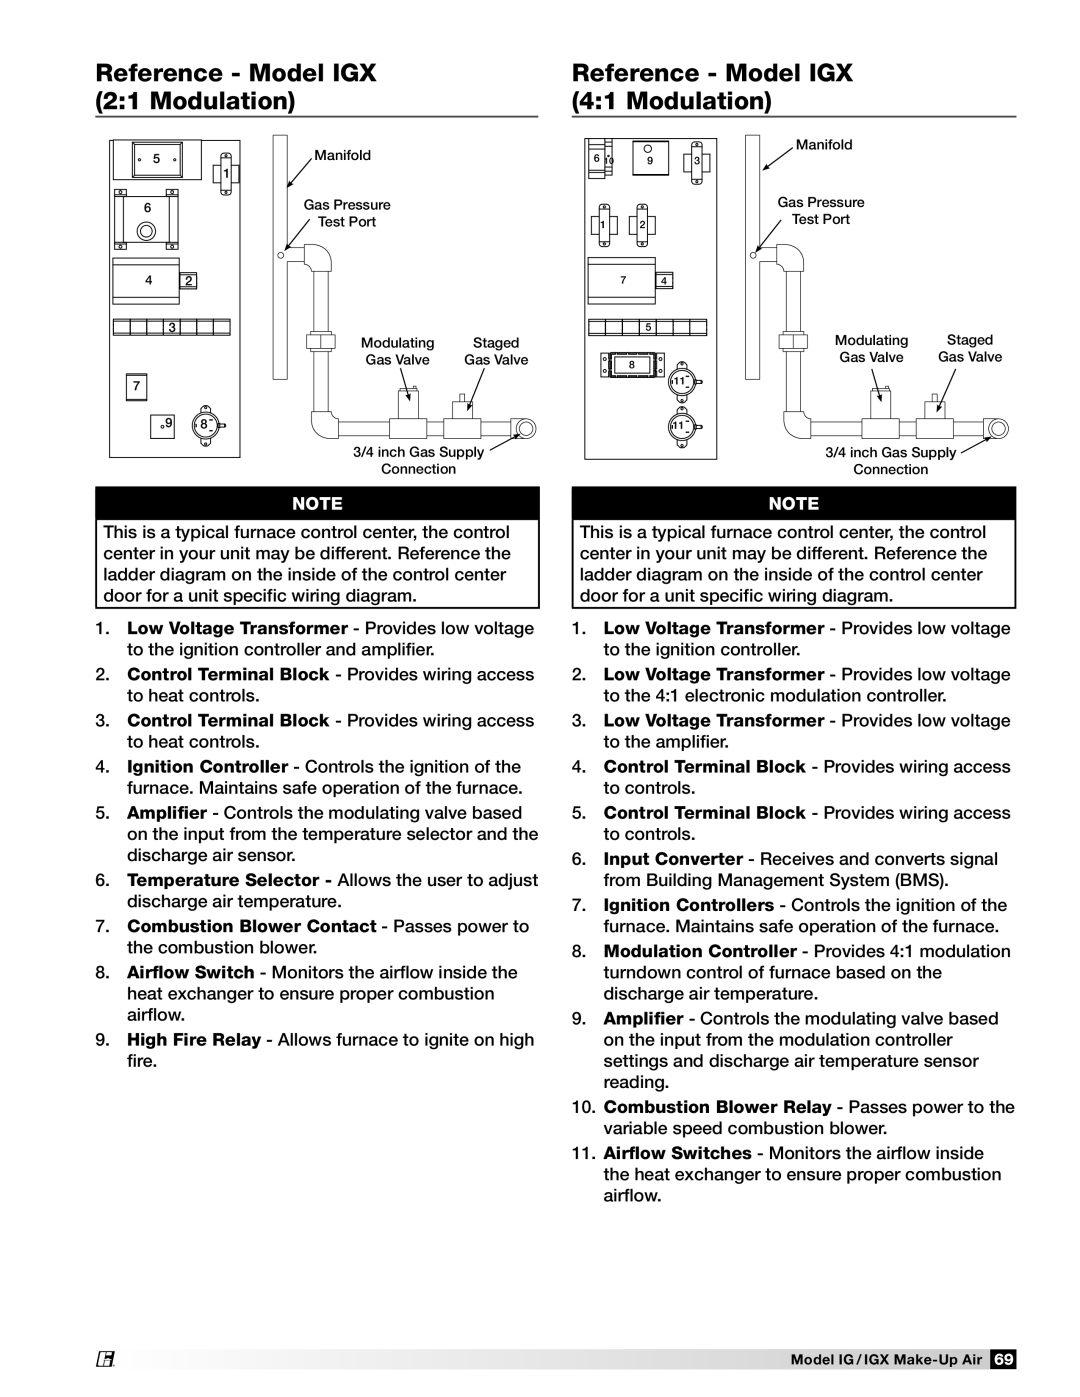 Greenheck Fan 470656 manual Reference - Model IGX 2:1 Modulation, Reference - Model IGX 4:1 Modulation, Modulating, Staged 